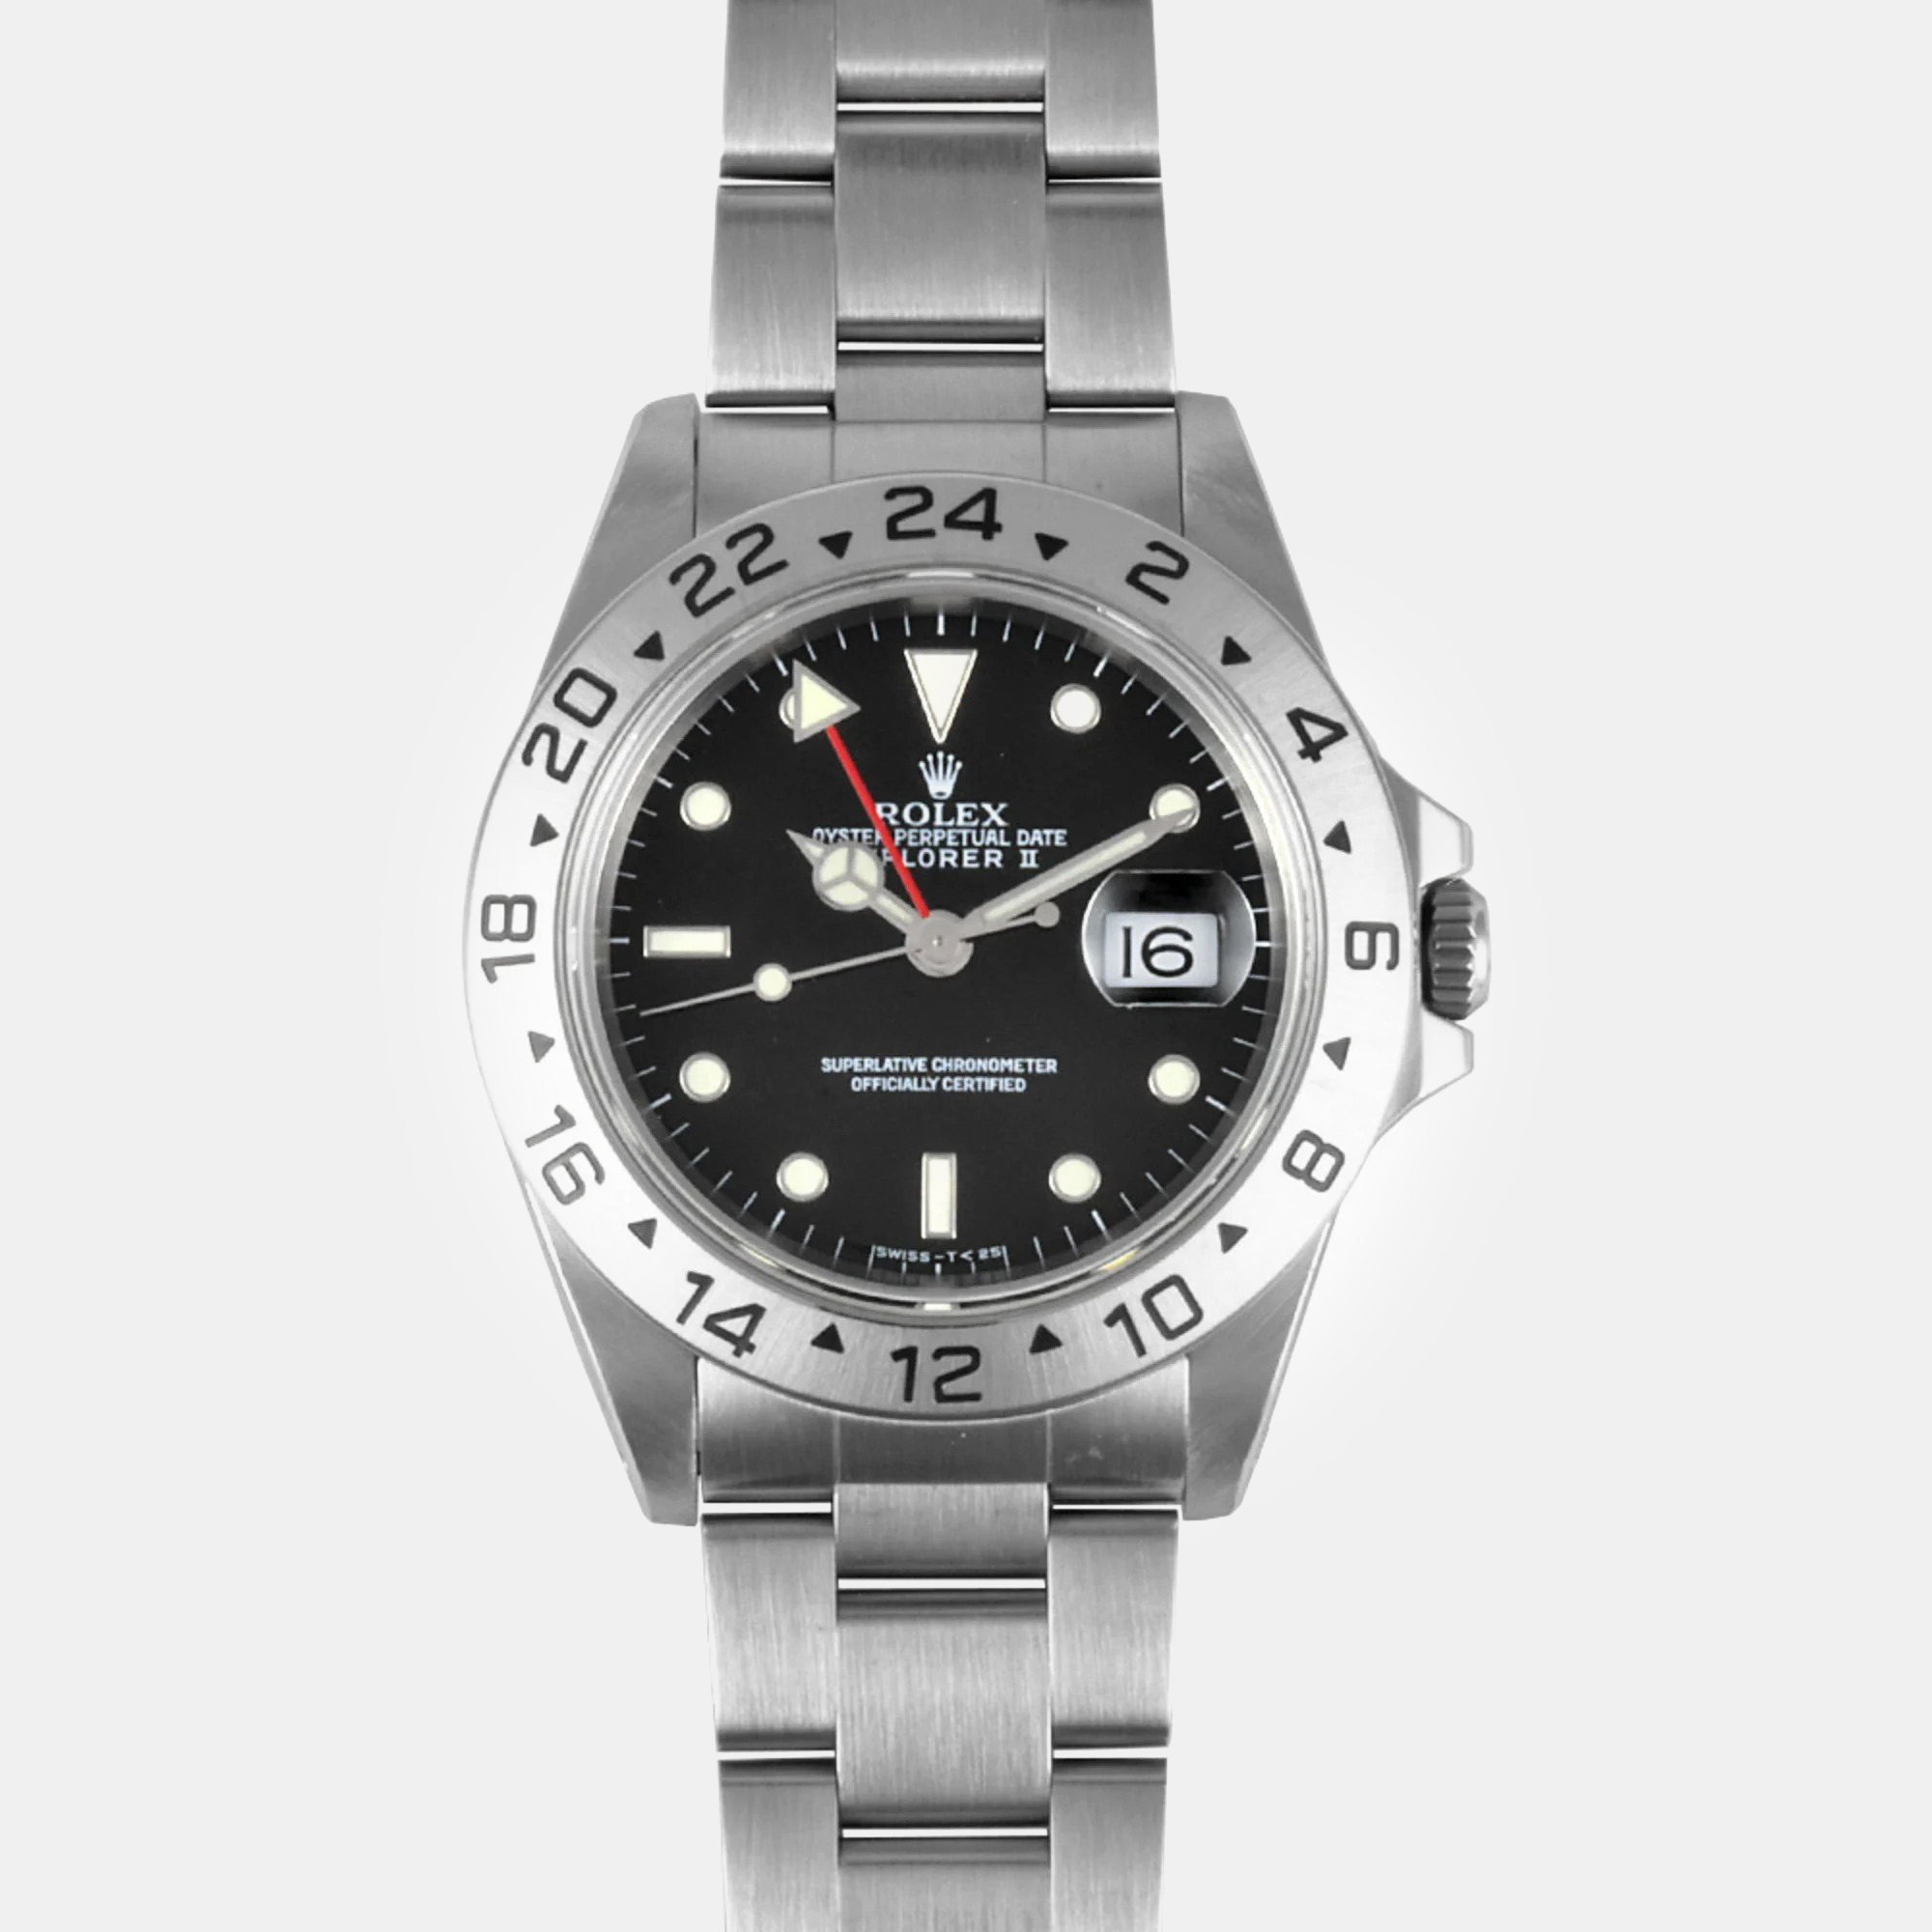 Rolex black stainless steel explorer ii 16570 automatic men's wristwatch 40 mm